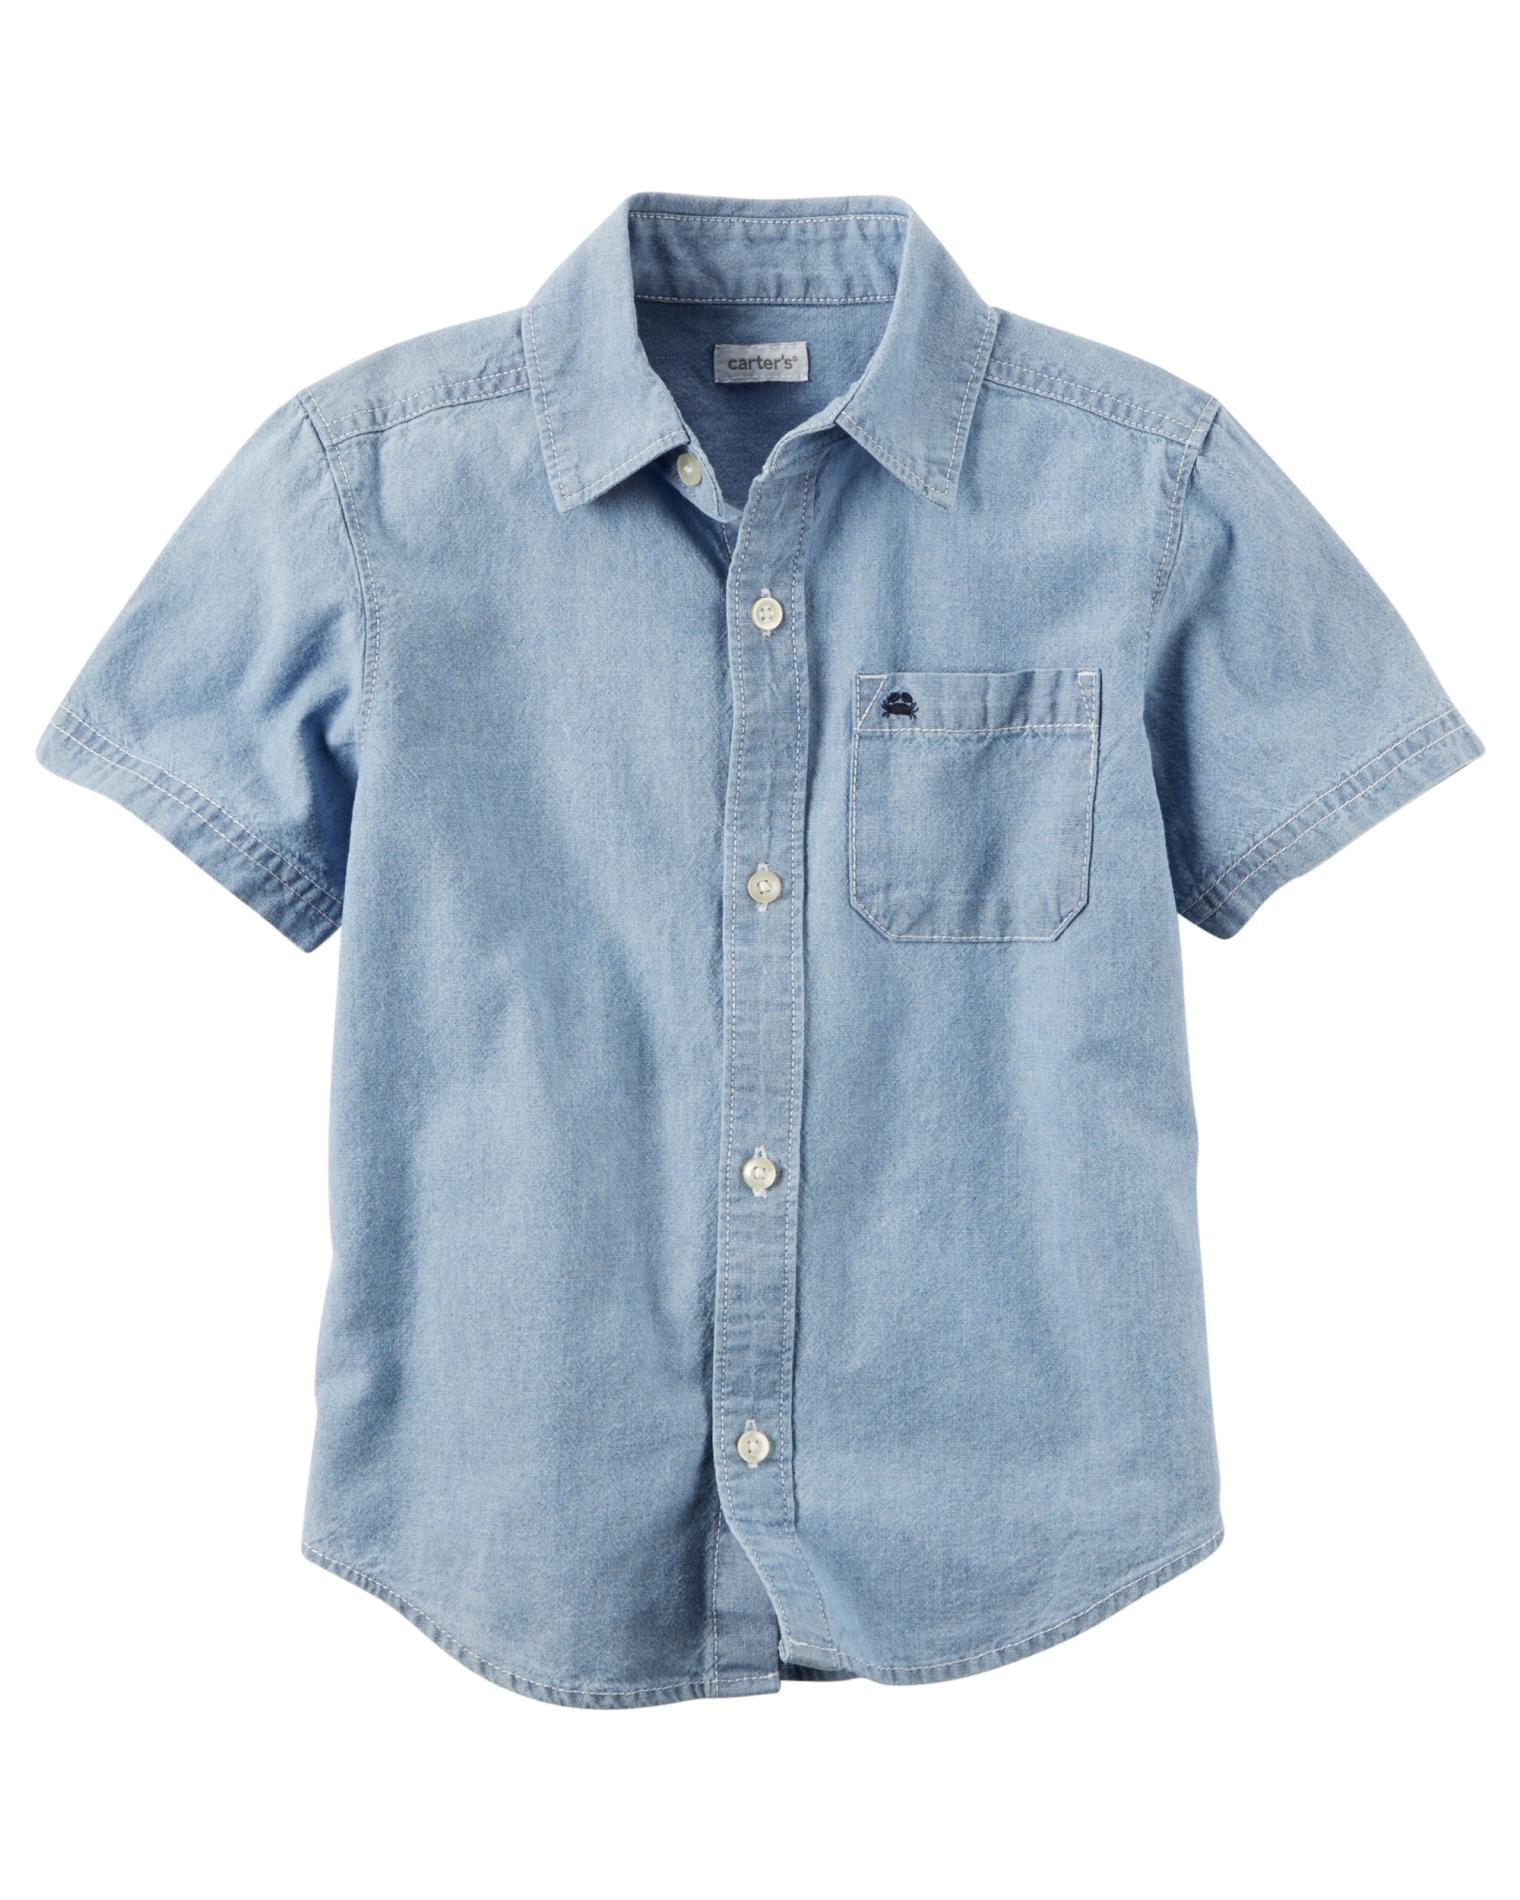 Carter's Boys' Chambray Button-Front Shirt